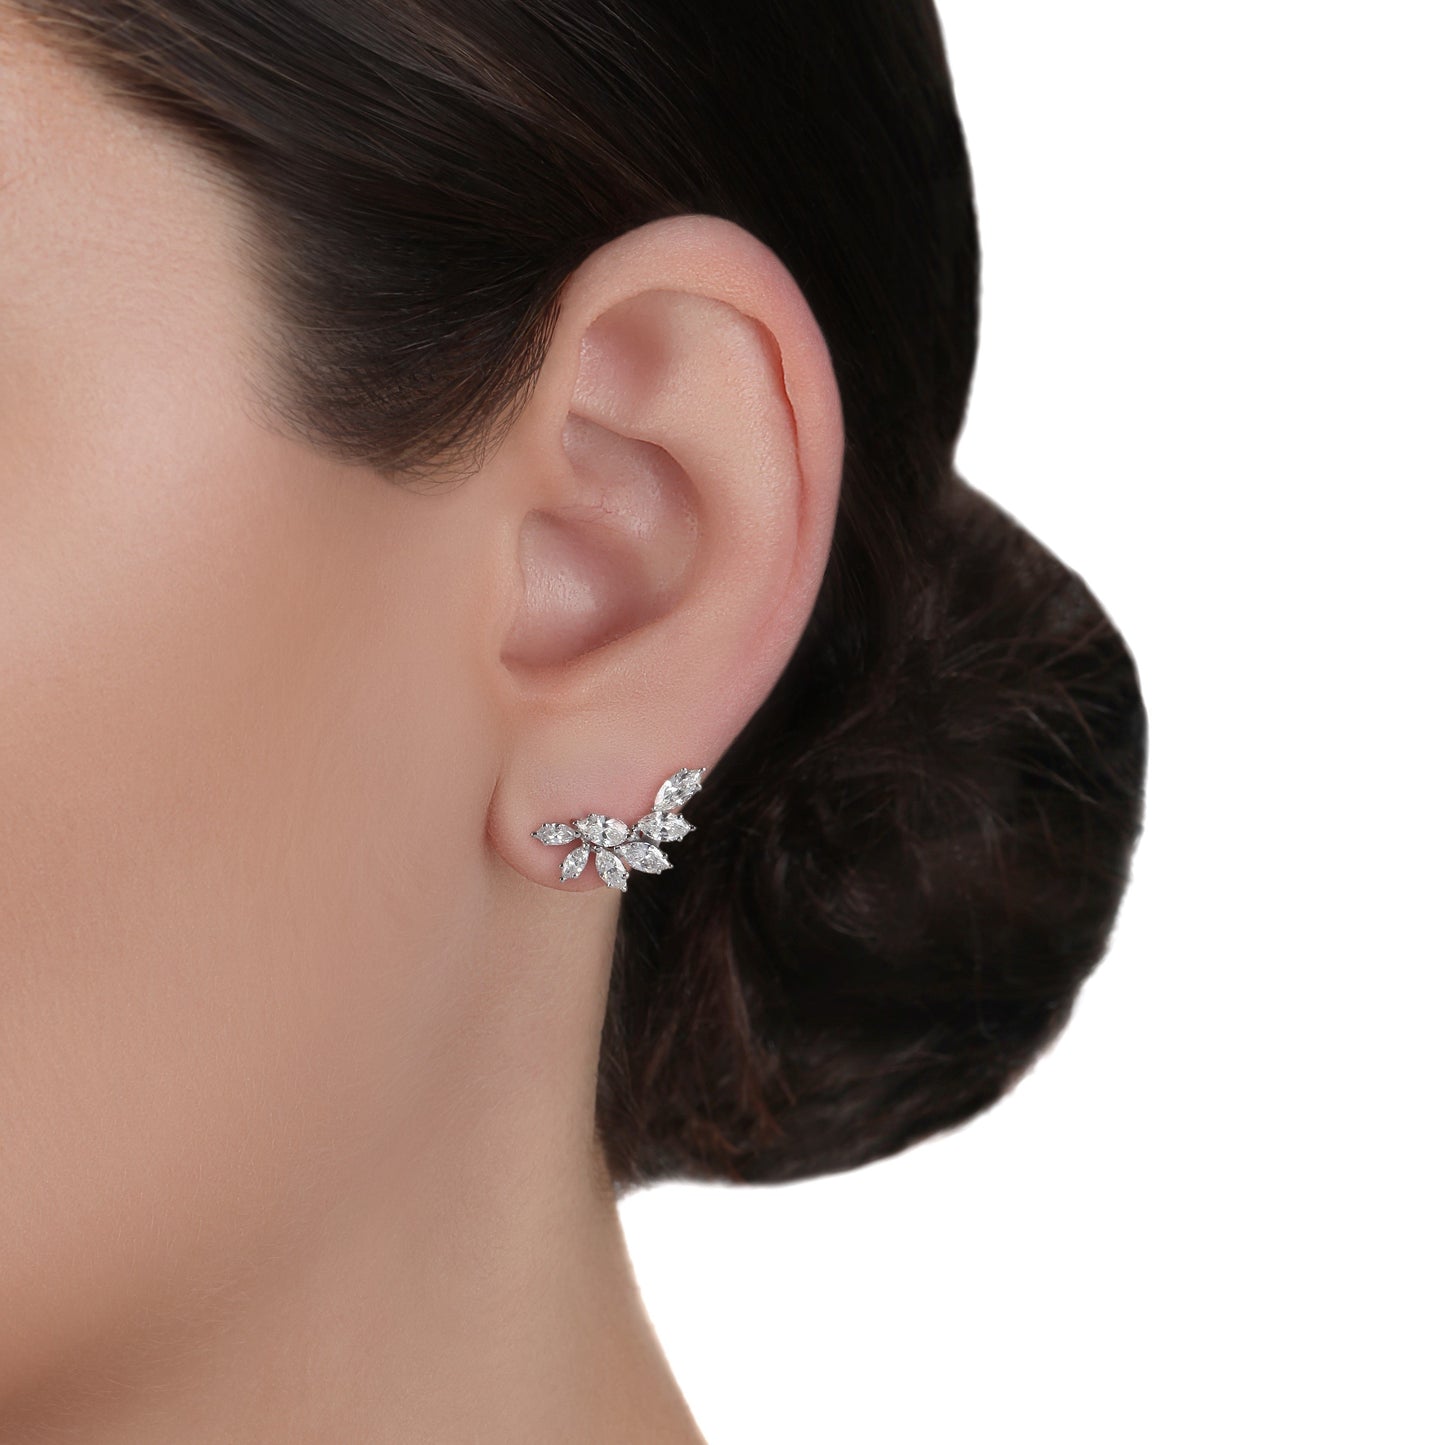  Marquise Crawler Diamond Earrings | Online Earring Shop